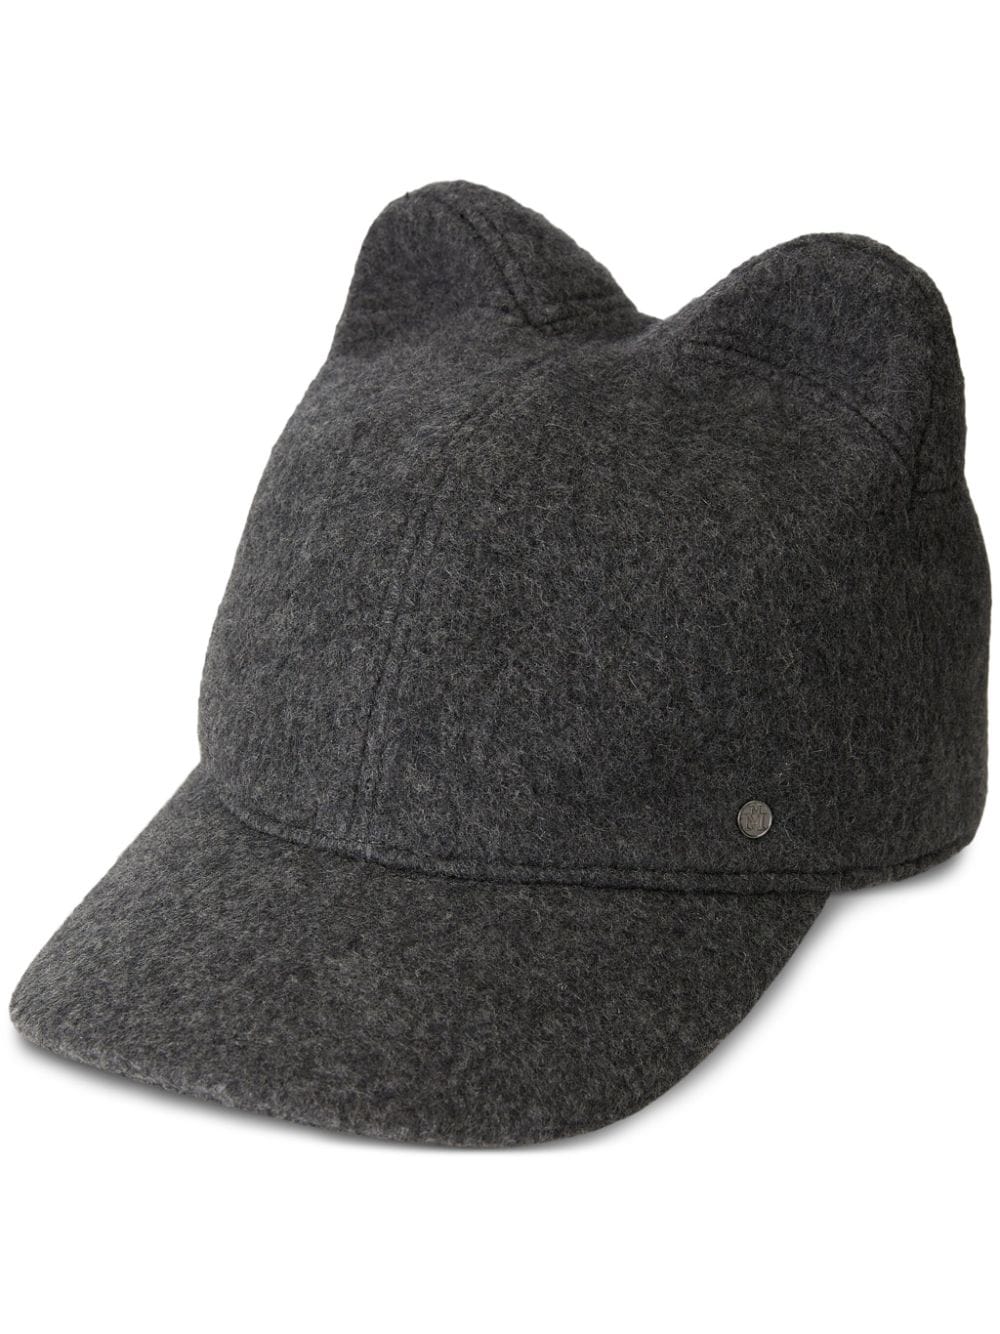 Maison Michel Jamie fleece cap with ears - Grey von Maison Michel